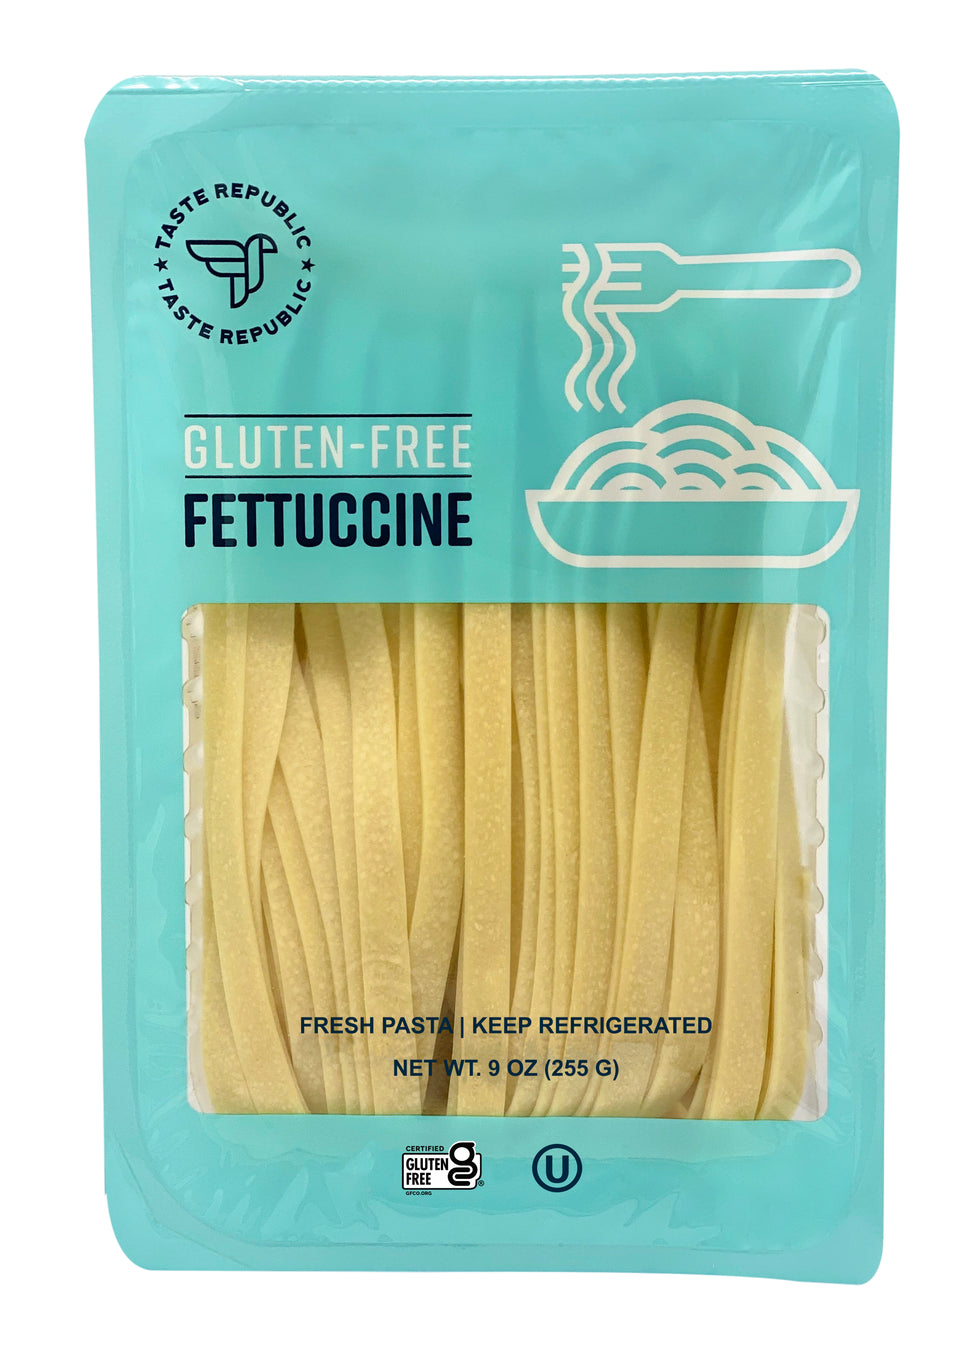 Fresh Gluten-Free Fettuccine (6-Pack)